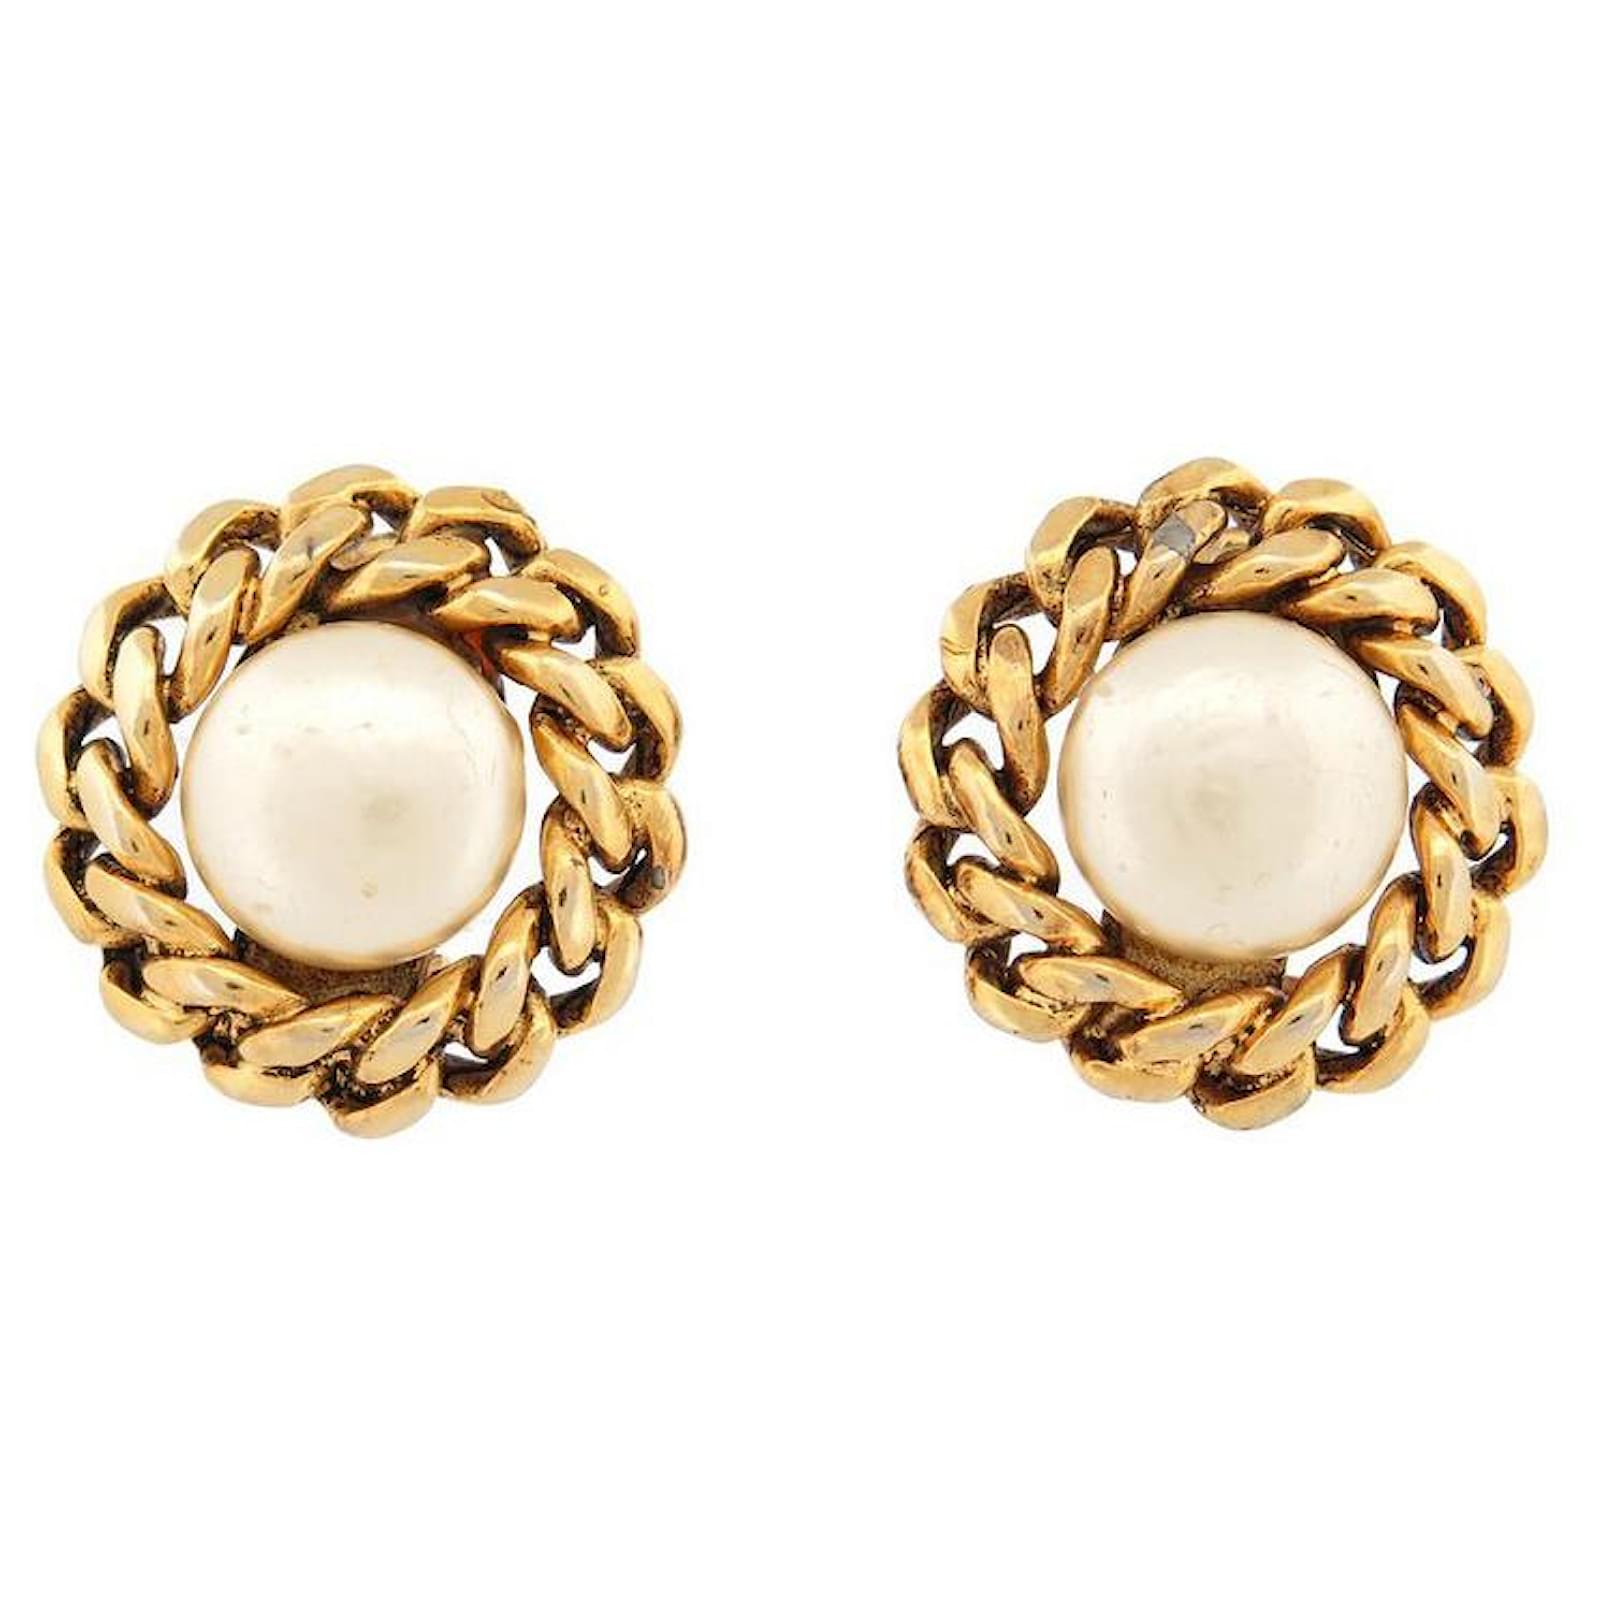 Rare Chanel Earrings Vintage Earrings Chanel Paris Earrings Rhinestone  Earrings Gold Chanel Earrings Earrings f  Chanel earrings Etsy earrings  Gold chanel